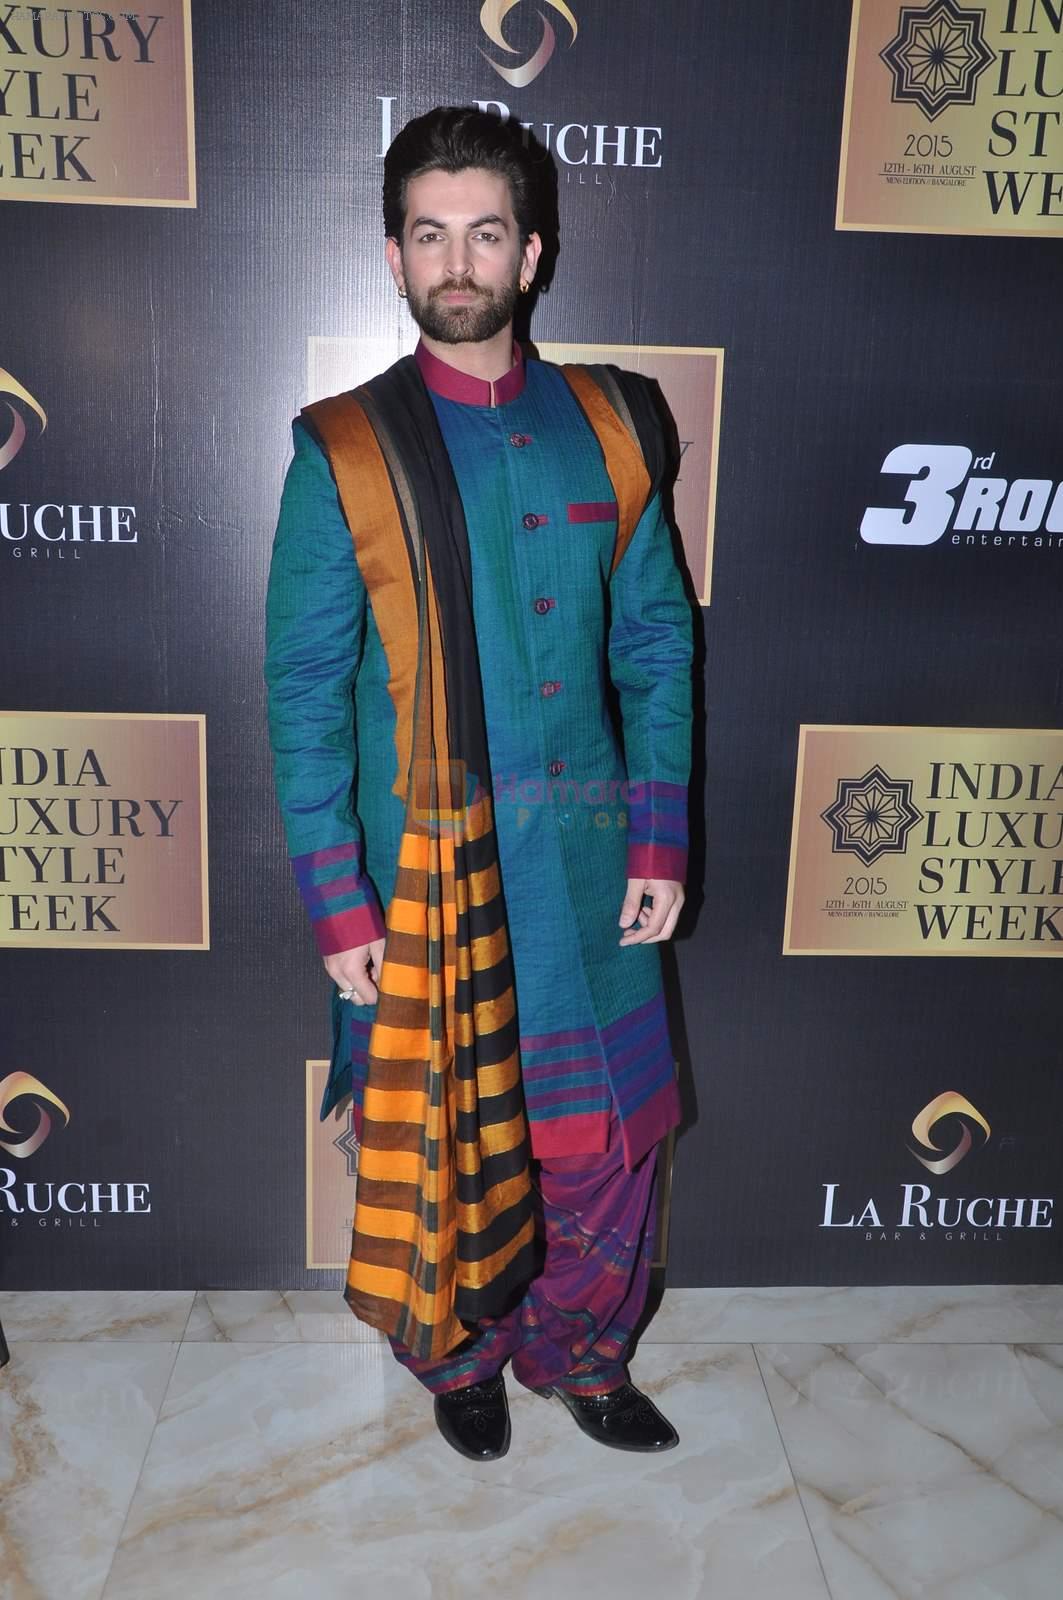 Neil Mukesh at India Luxury week meet in Bandra, Mumbai on 28th April 2015